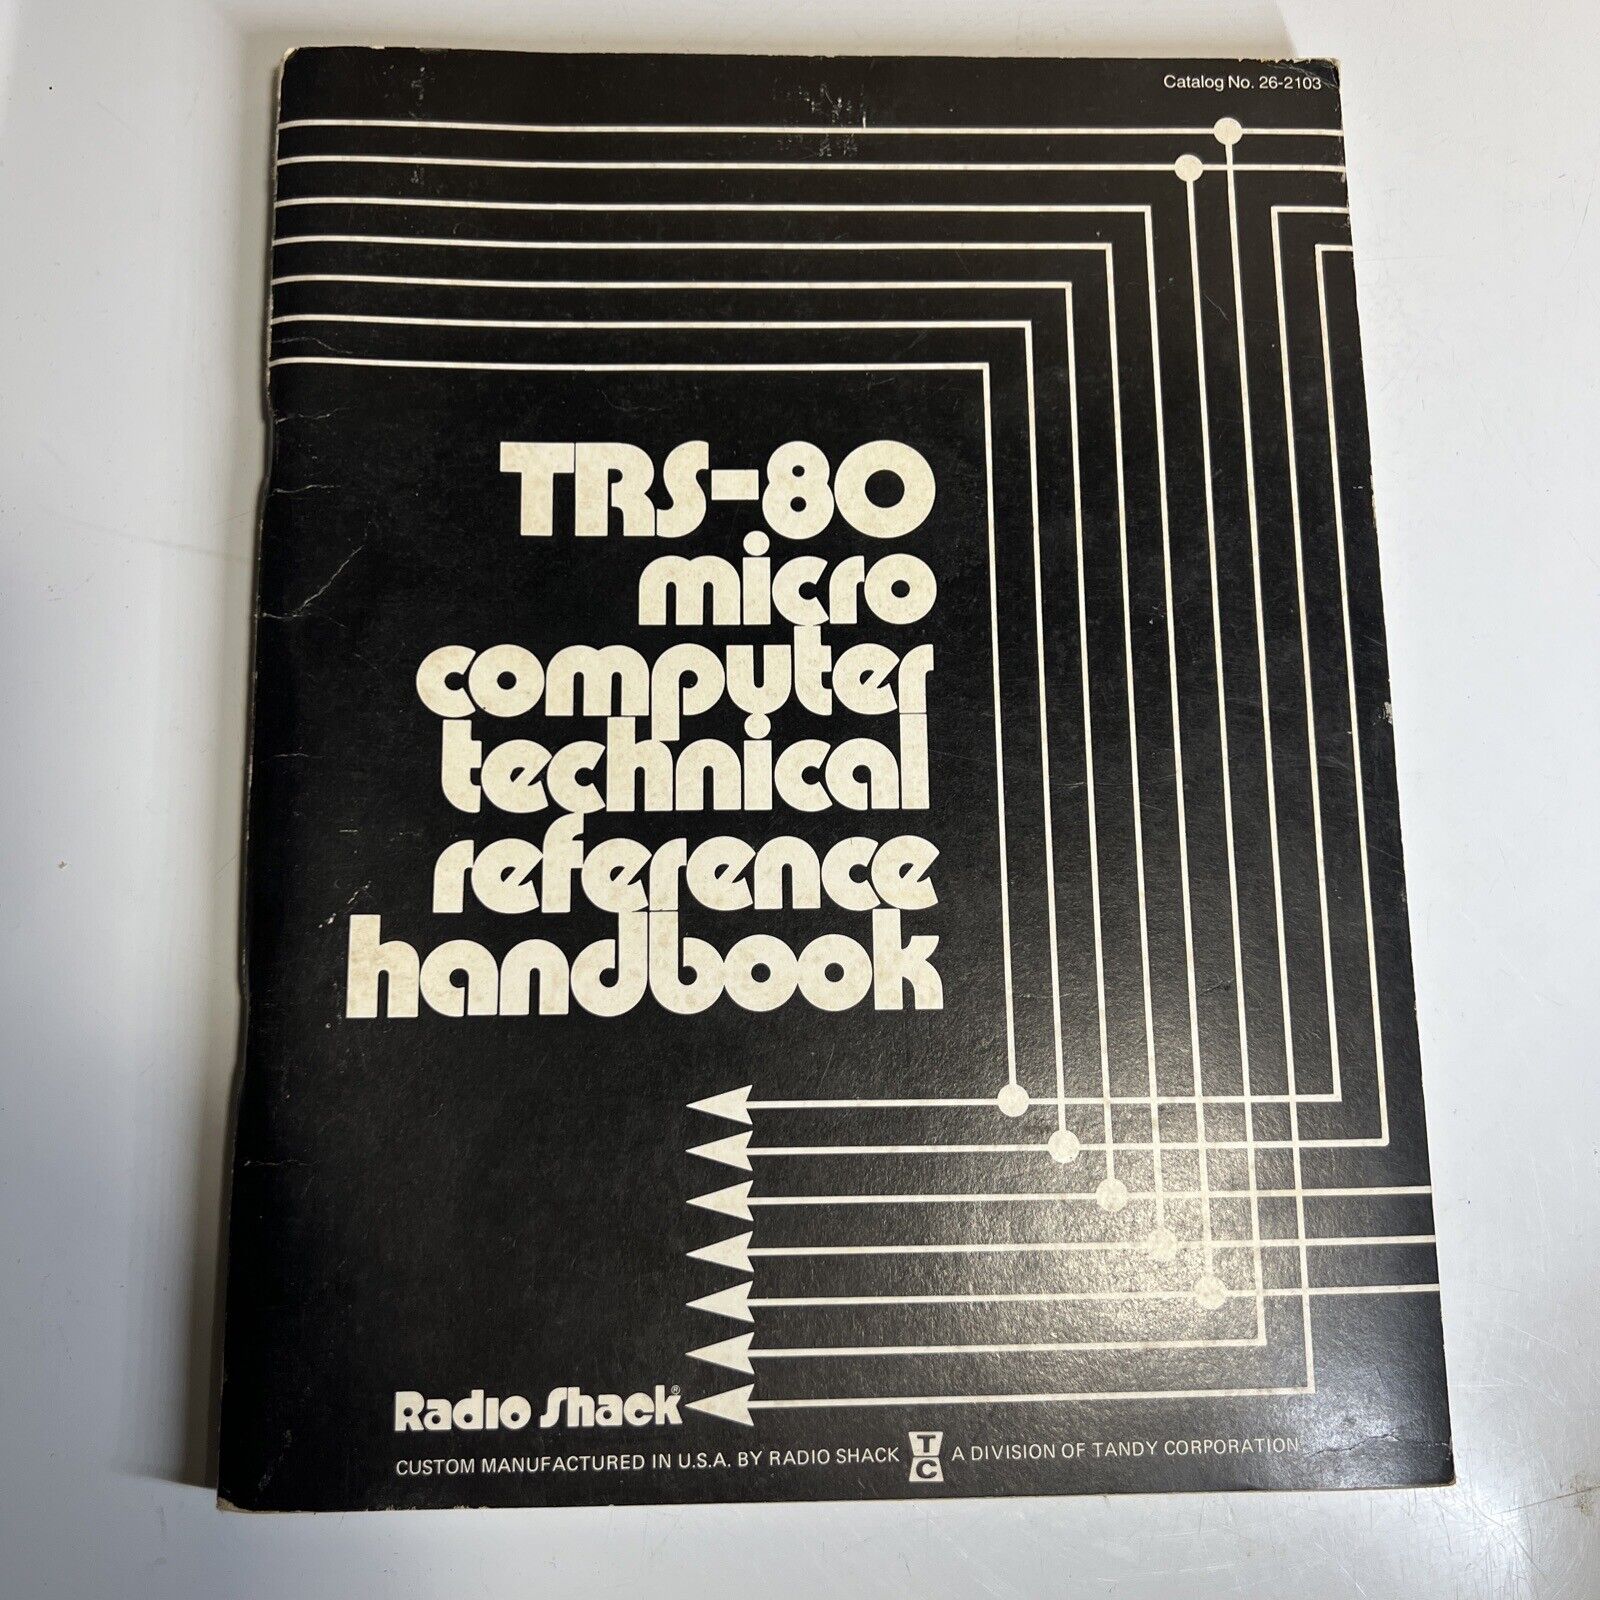 Radio Shack TRS-80 Microcomputer Technical Reference Handbook Vintage 1980s